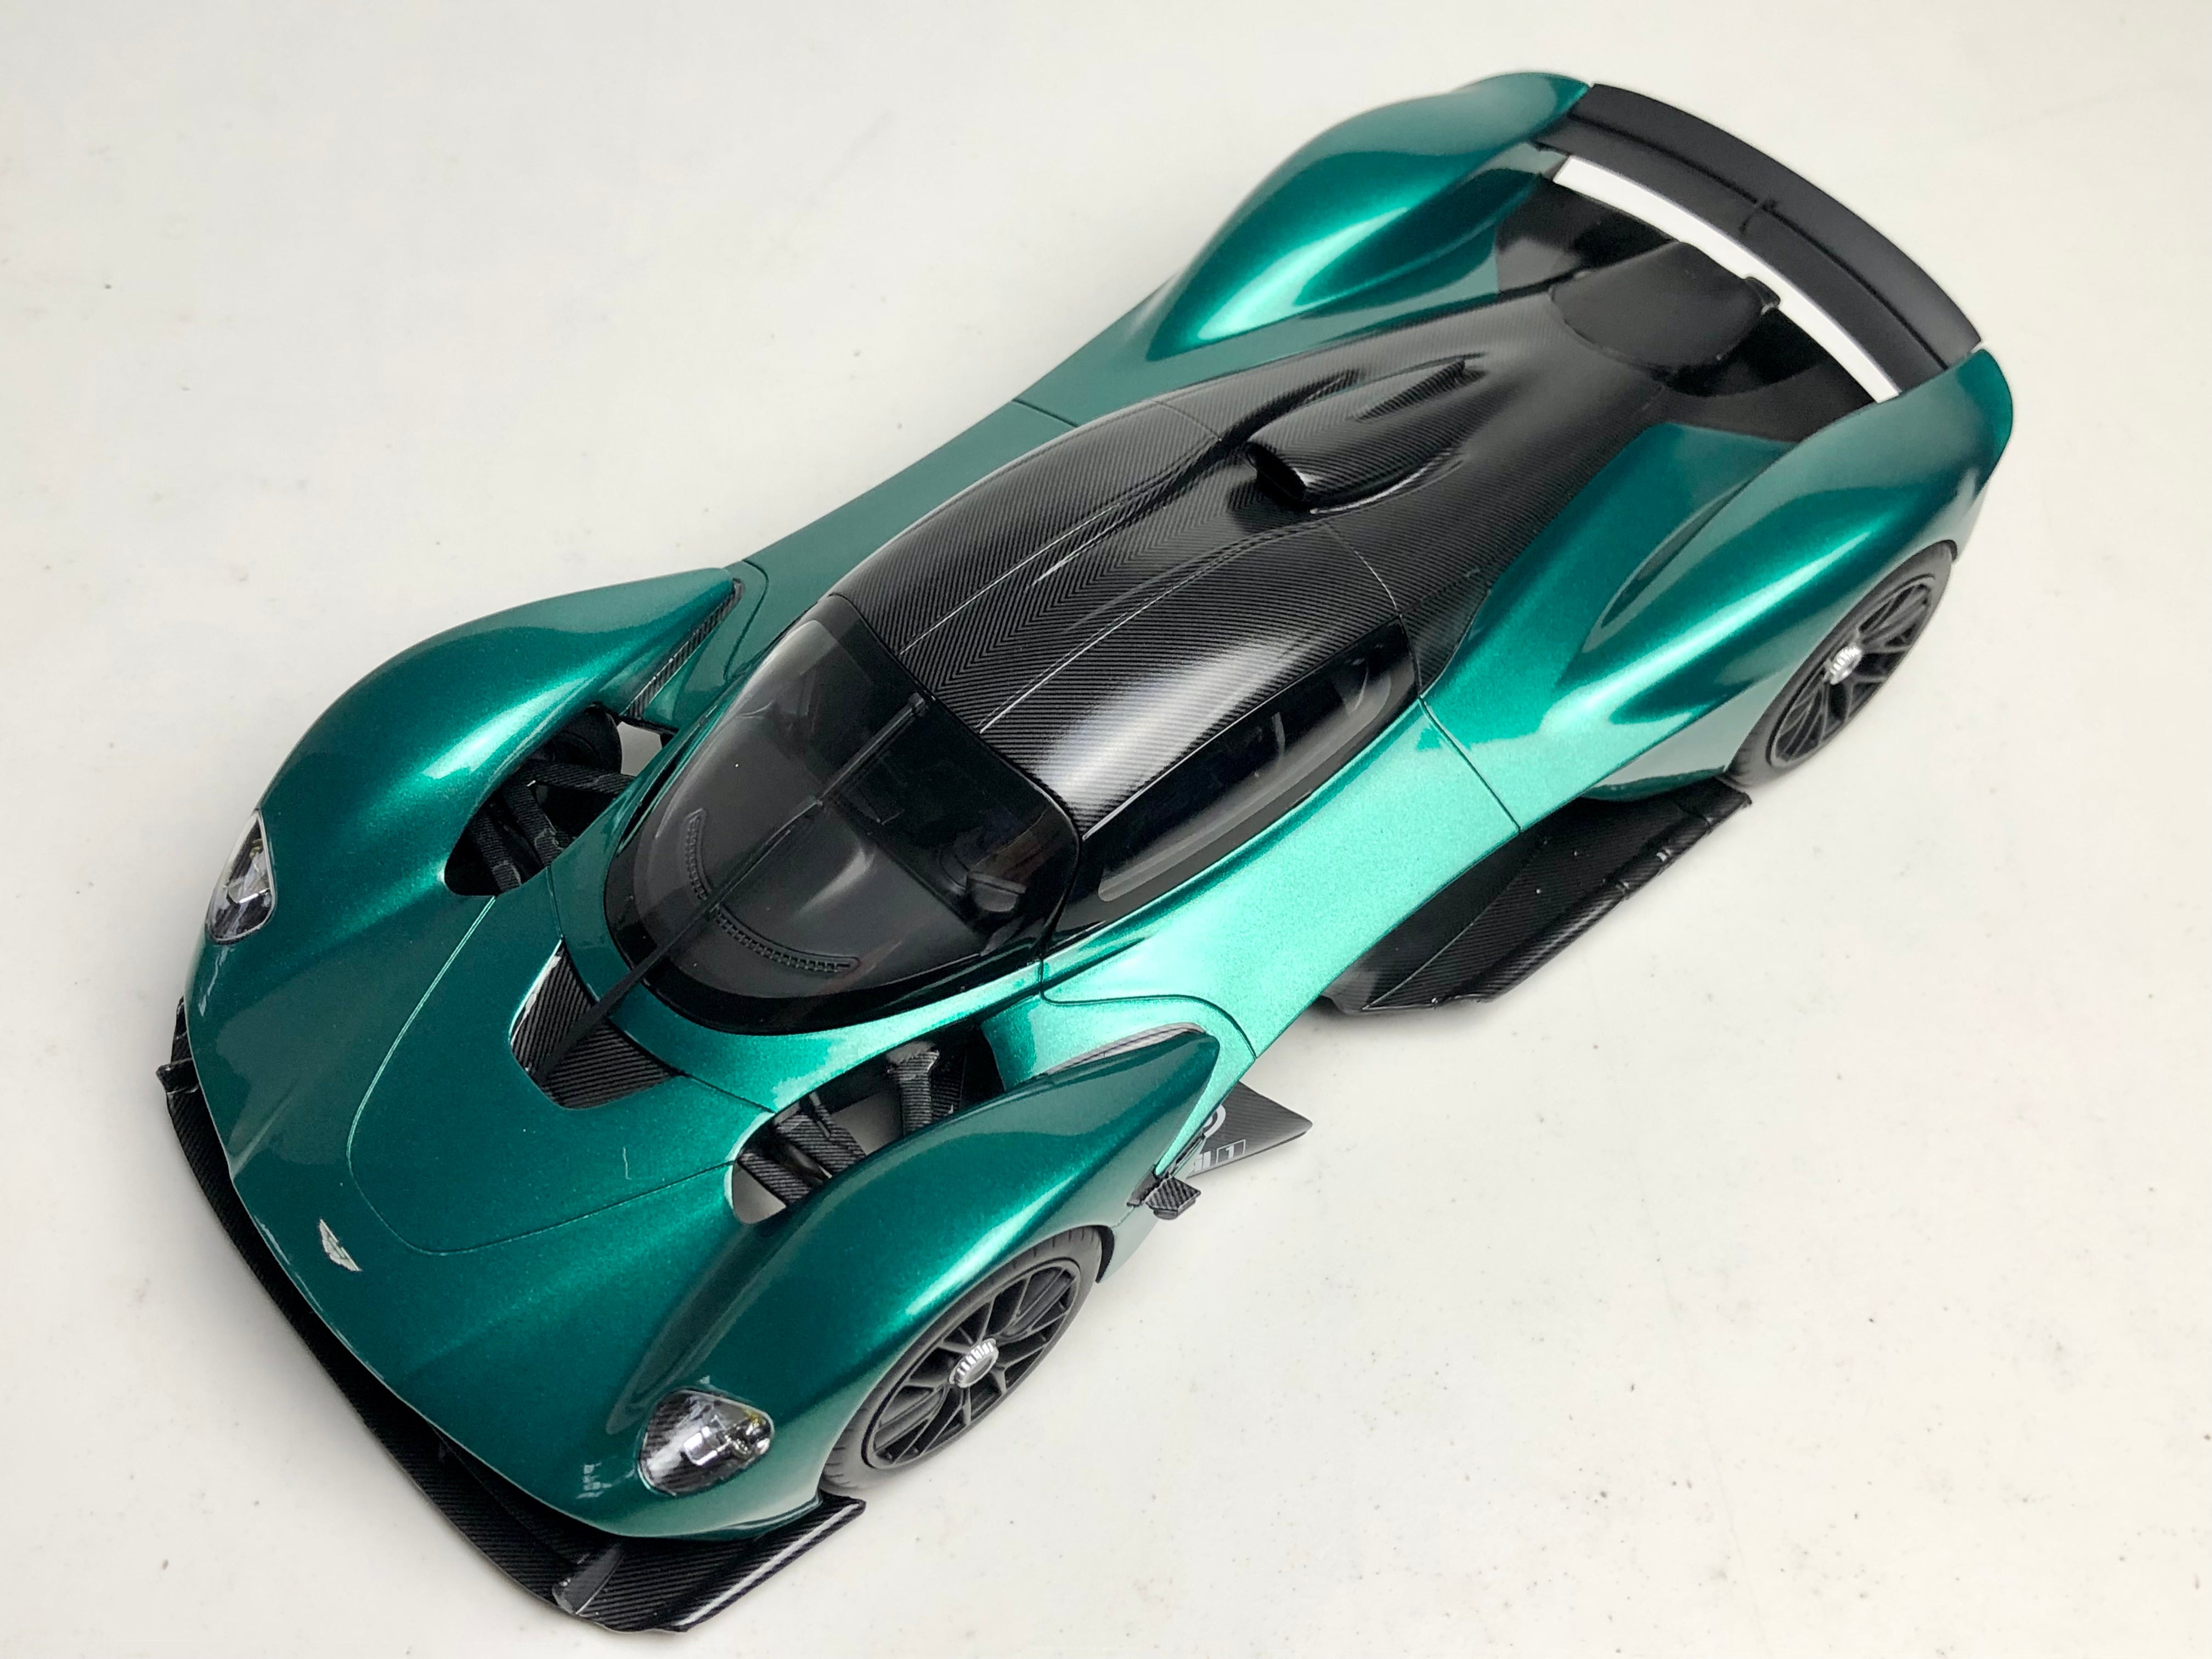 Aston Martin Valkyrie 1:18 scale